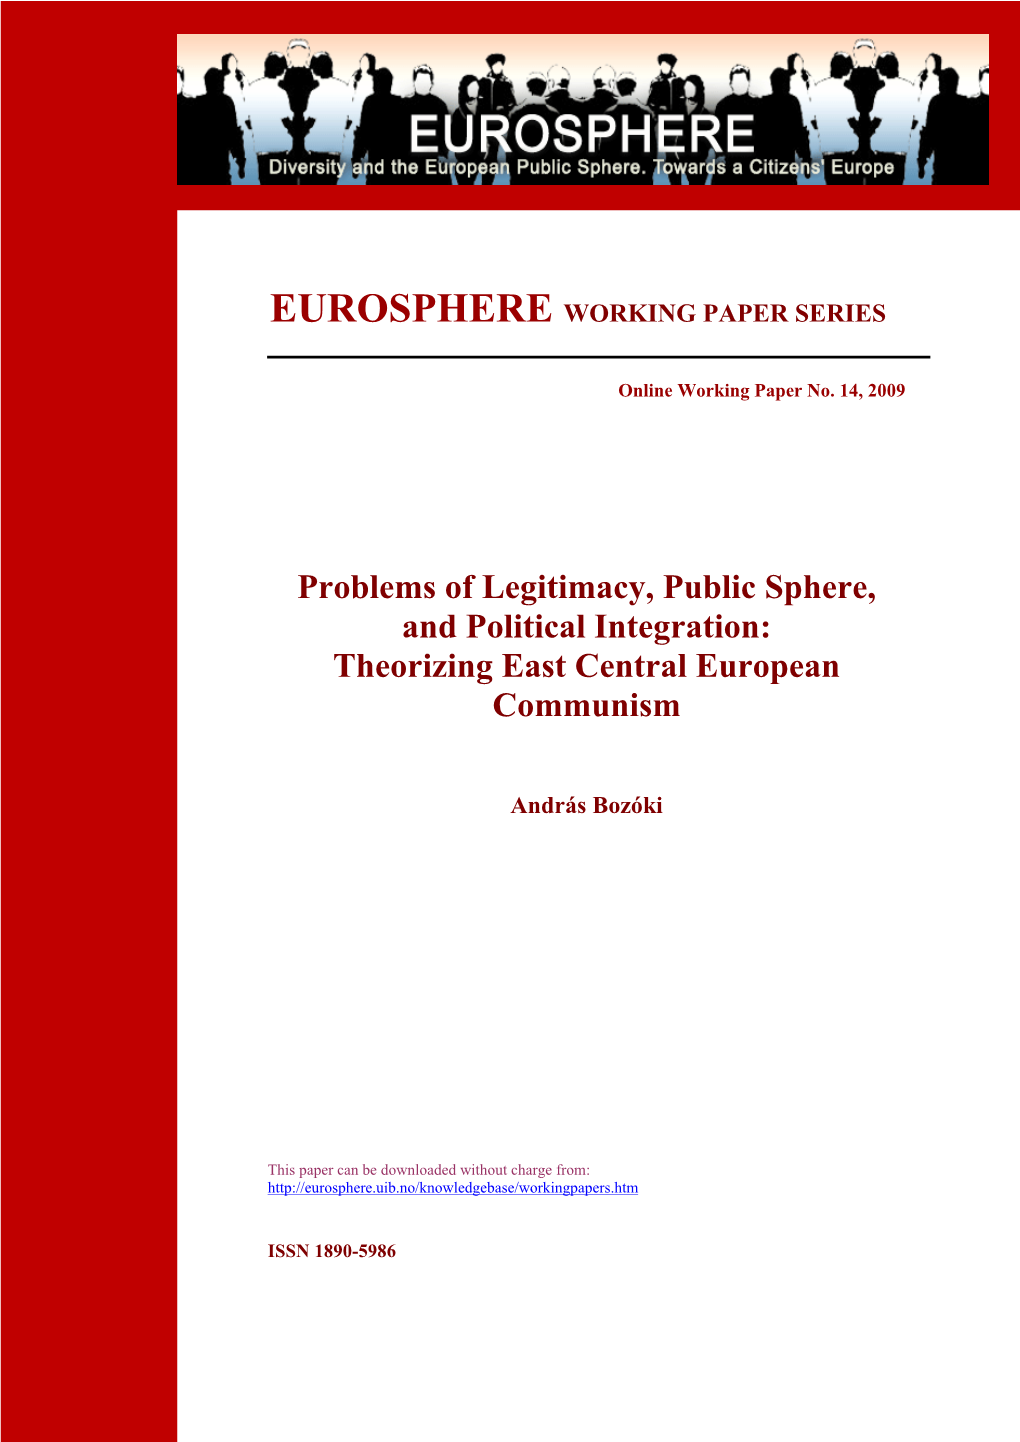 Problems of Legitimacy, Public Sphere, and Political Integration: Theorizing East Central European Communism